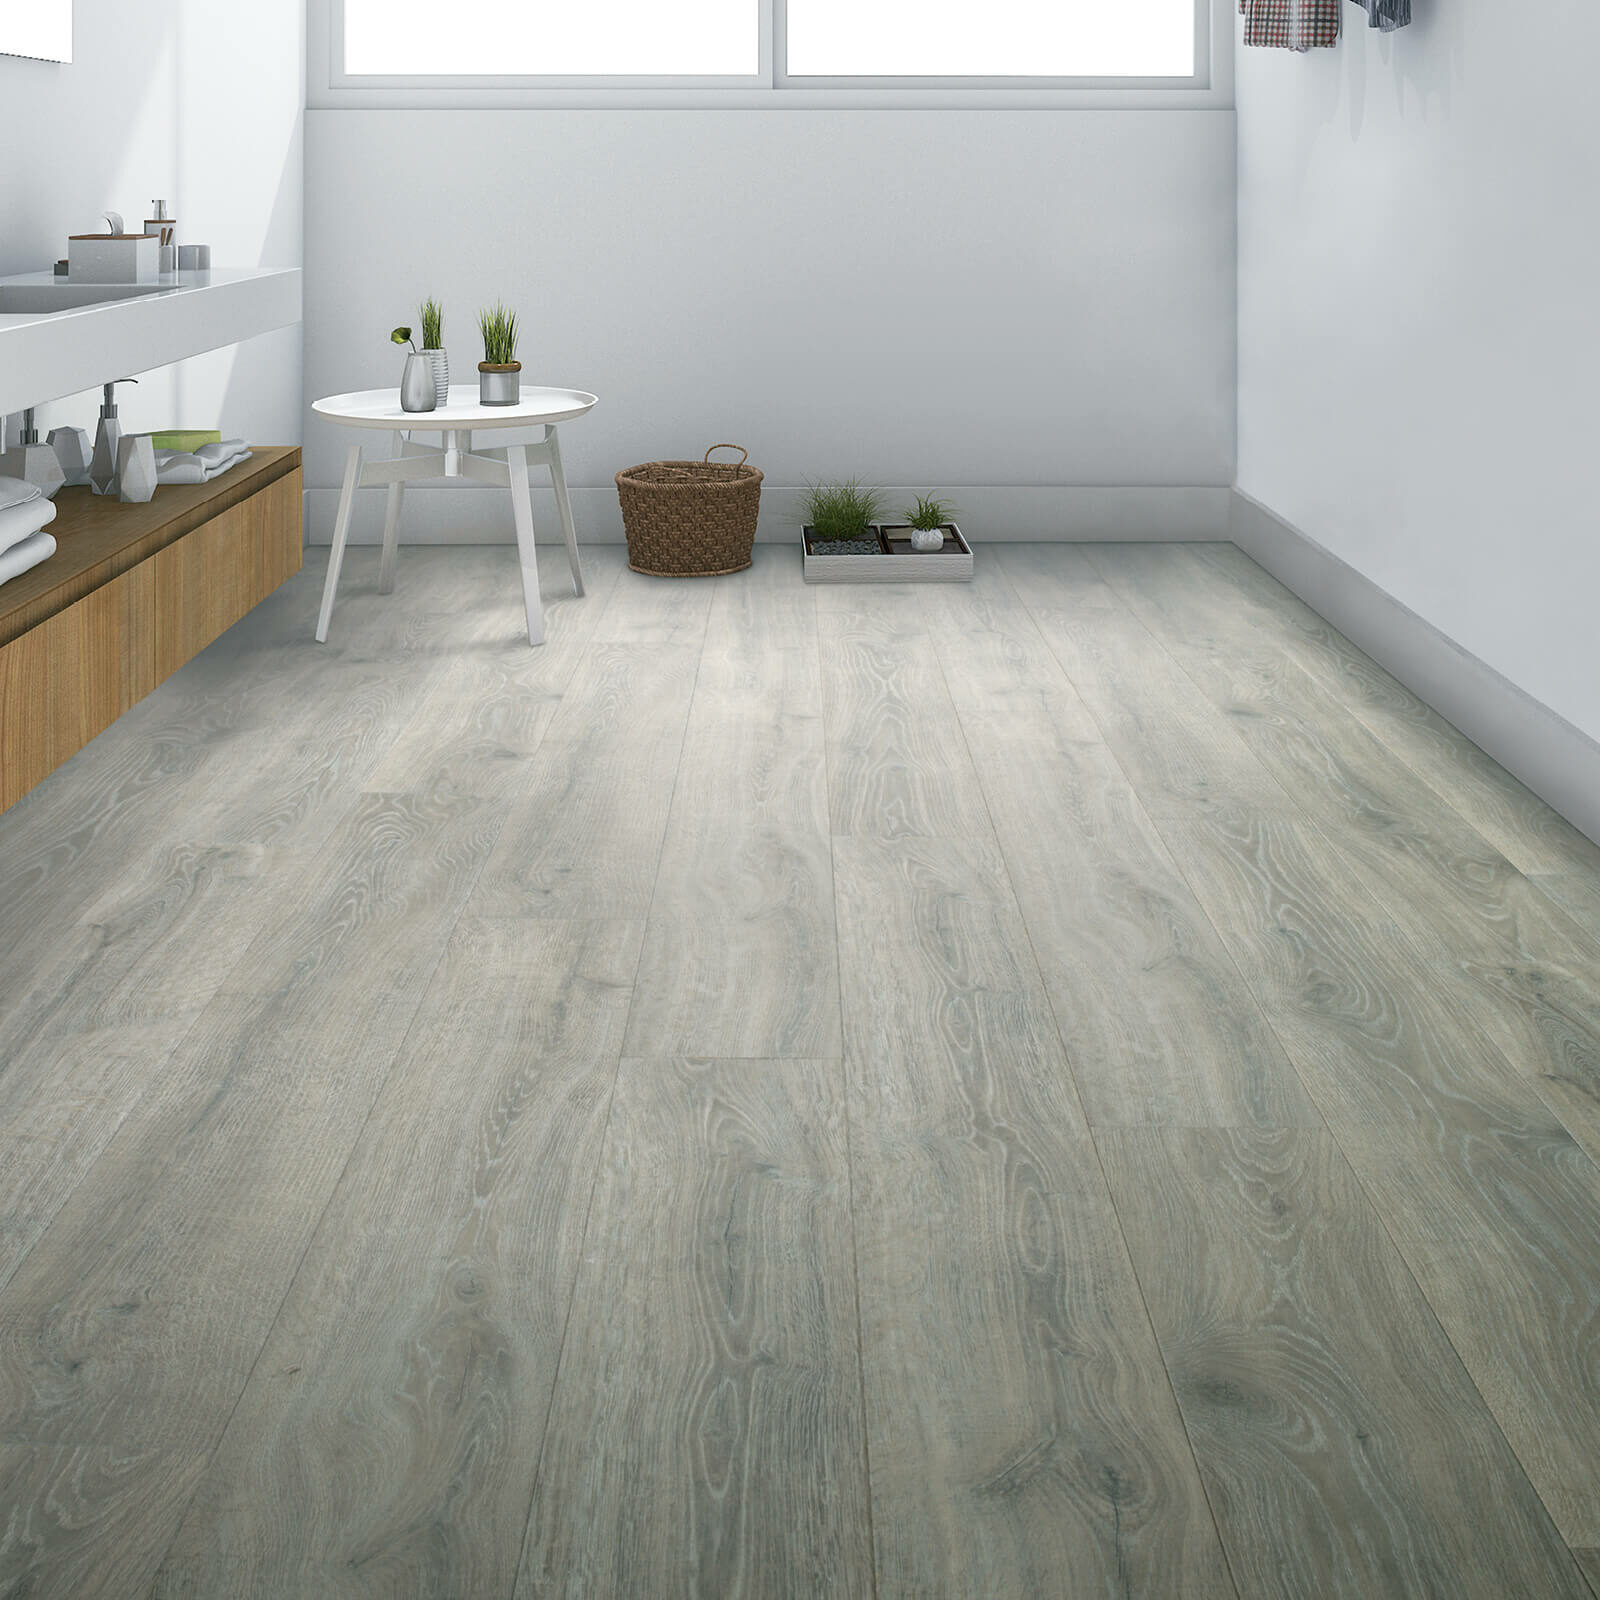 Vinyl flooring | Carpetland USA Granite & Flooring